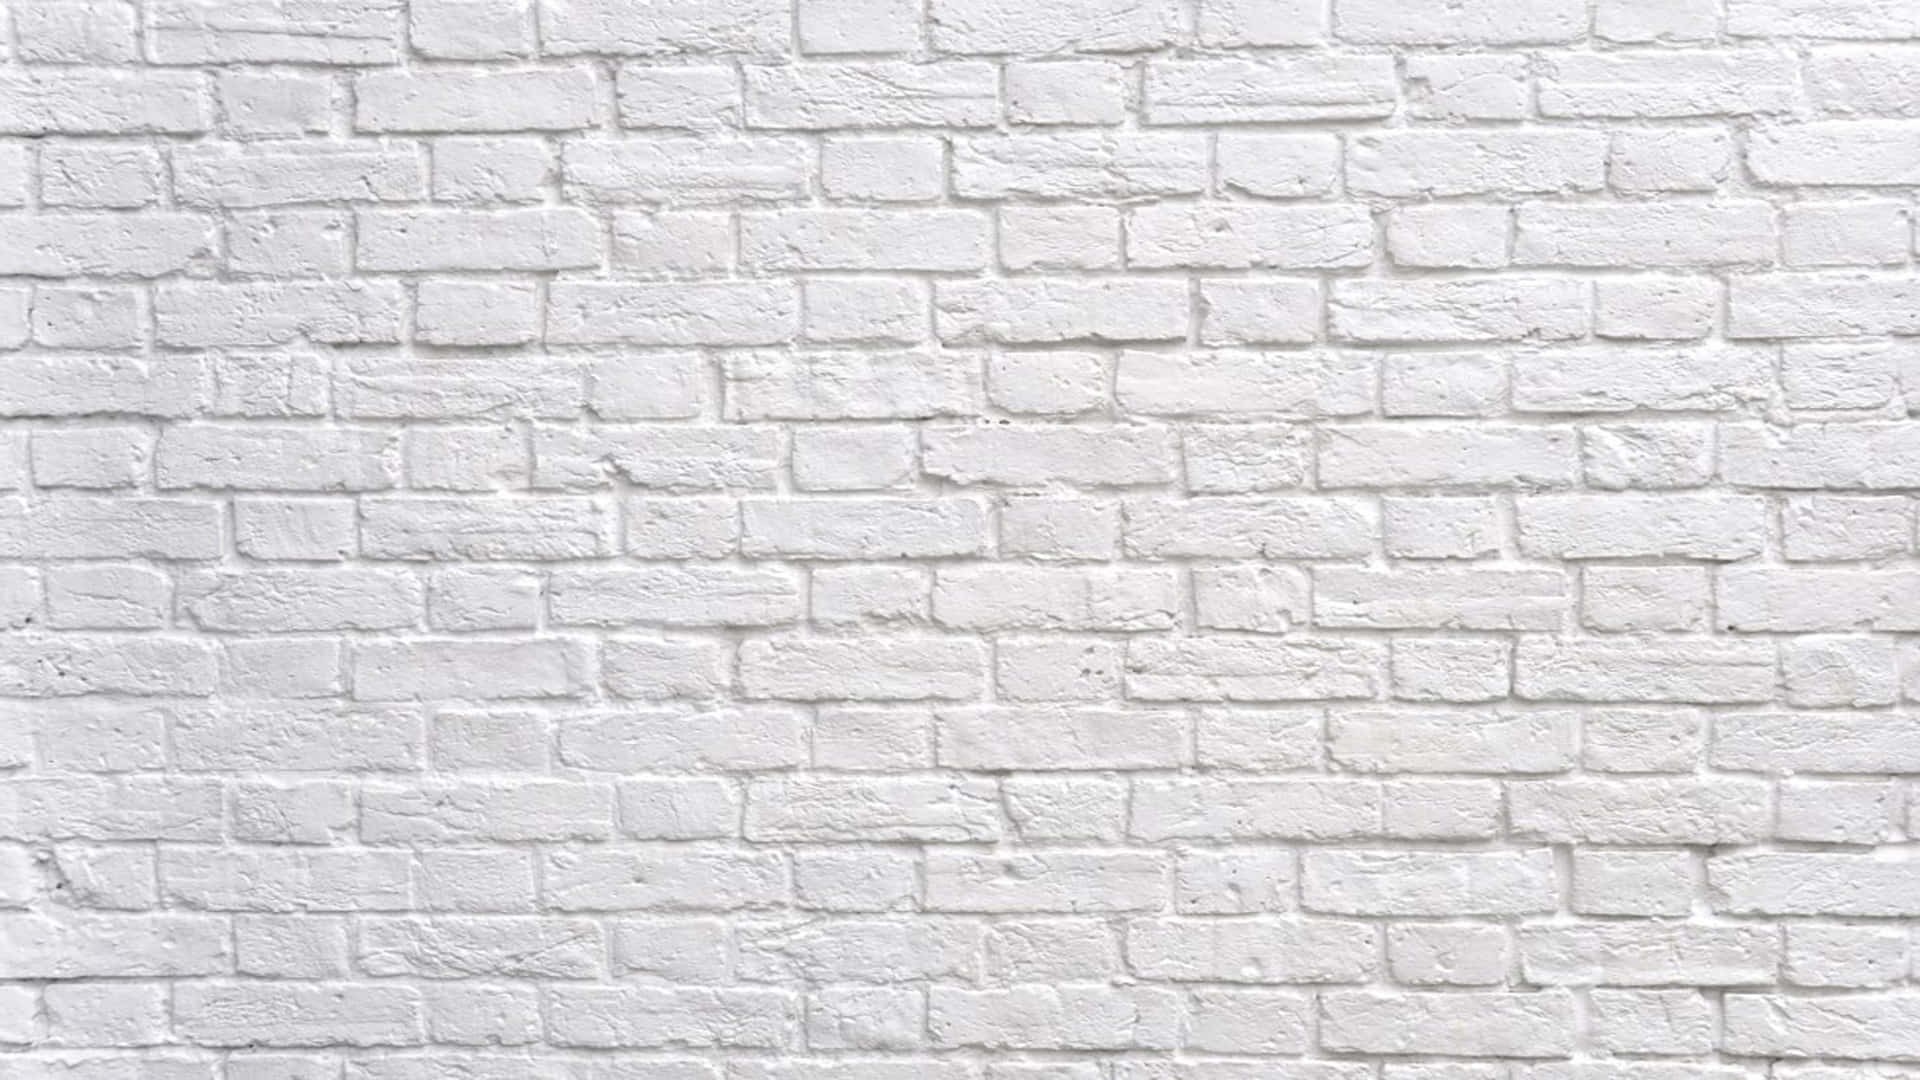 White Brick Bilder 1920 X 1080